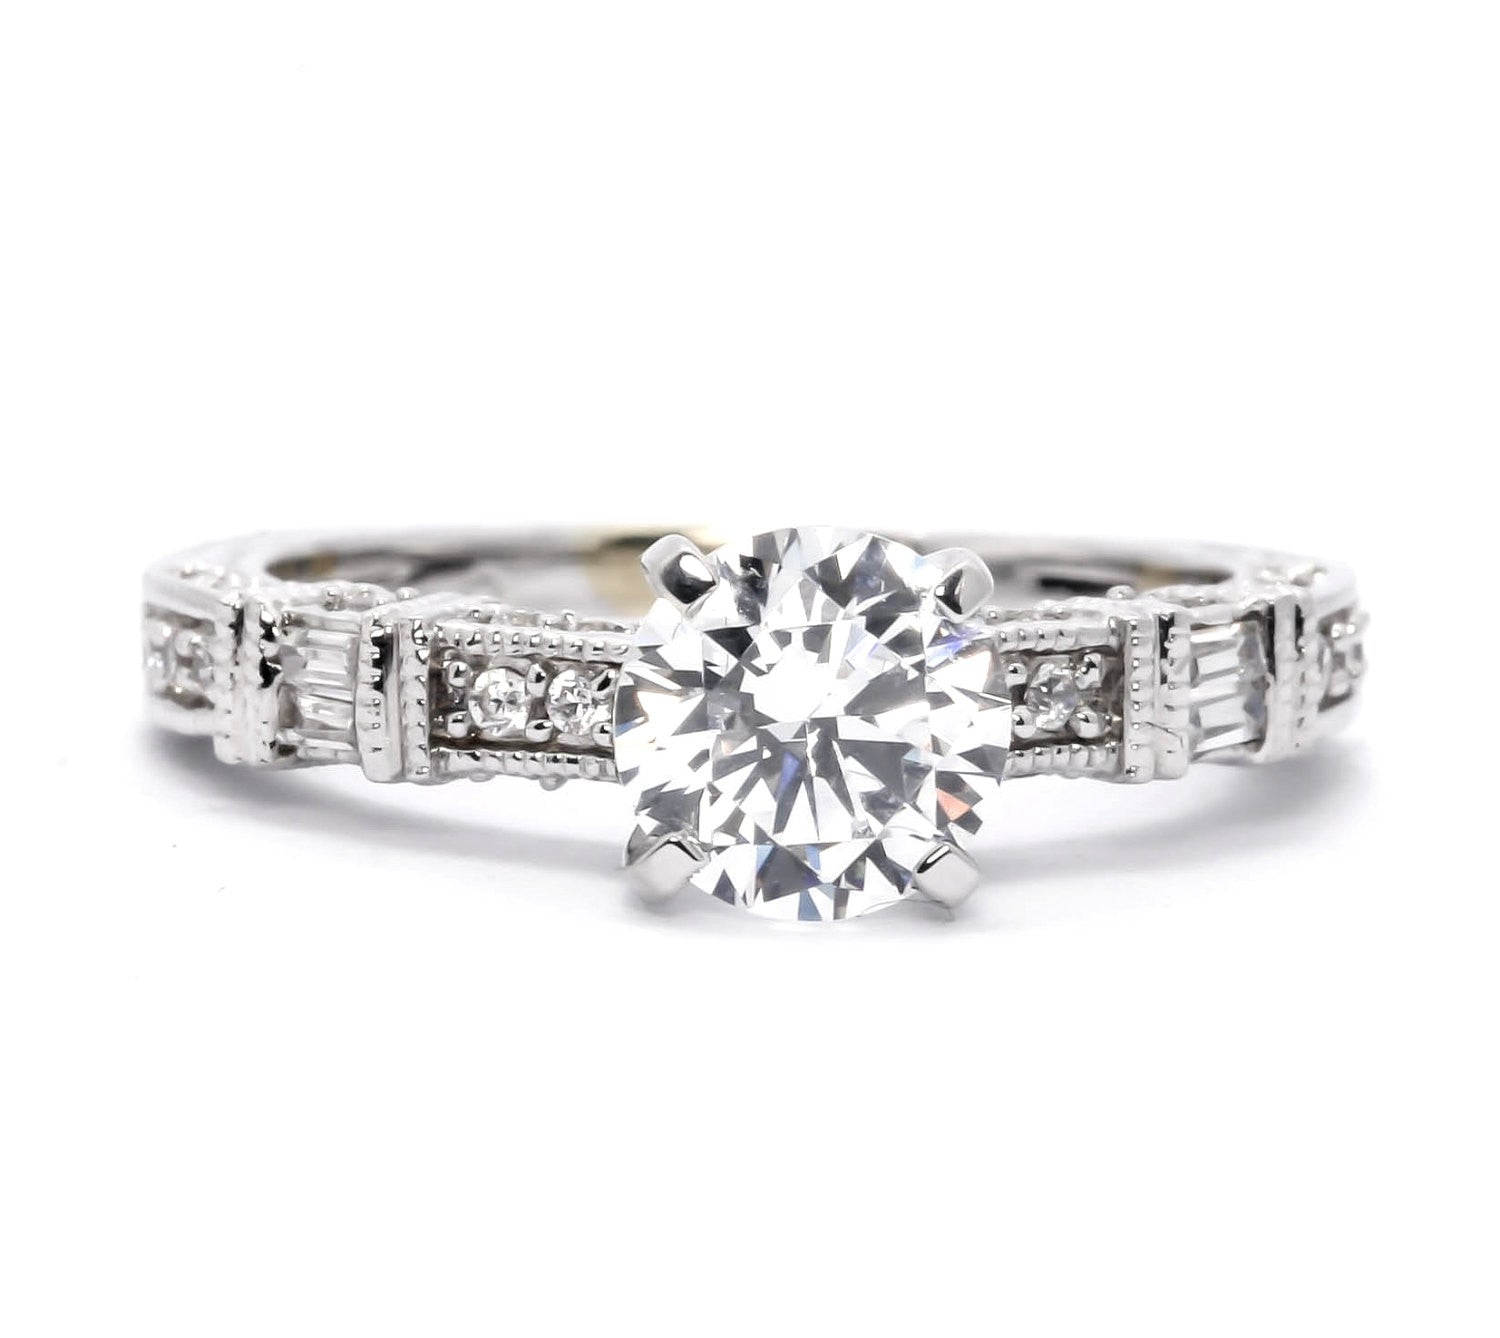 Moissanite Engagement Ring Wedding Set, Unique Art Deco Style With 1.25 Carat Forever Brilliant Moissanite & 1 Carat Diamonds - FB73109